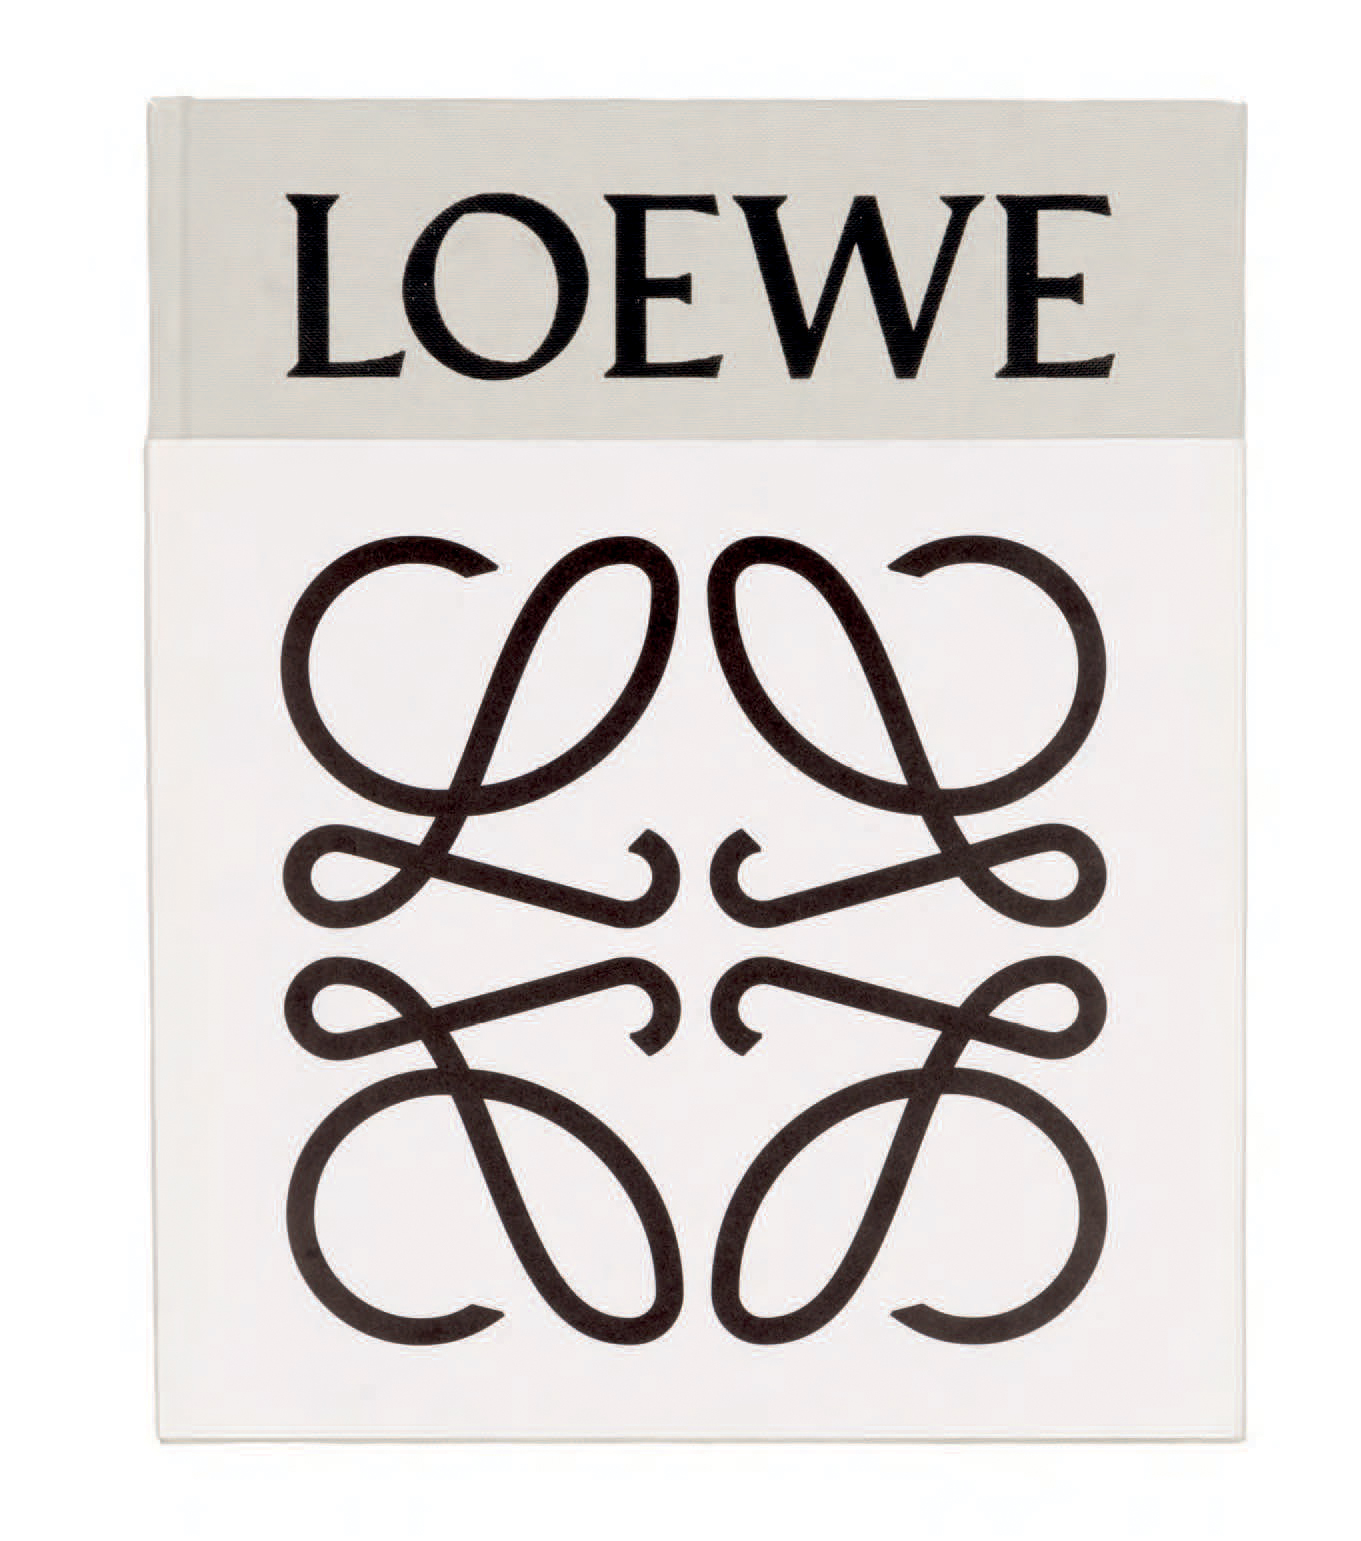 Case study. Loewe x M/M (Paris). - Issue 7 - System Magazine